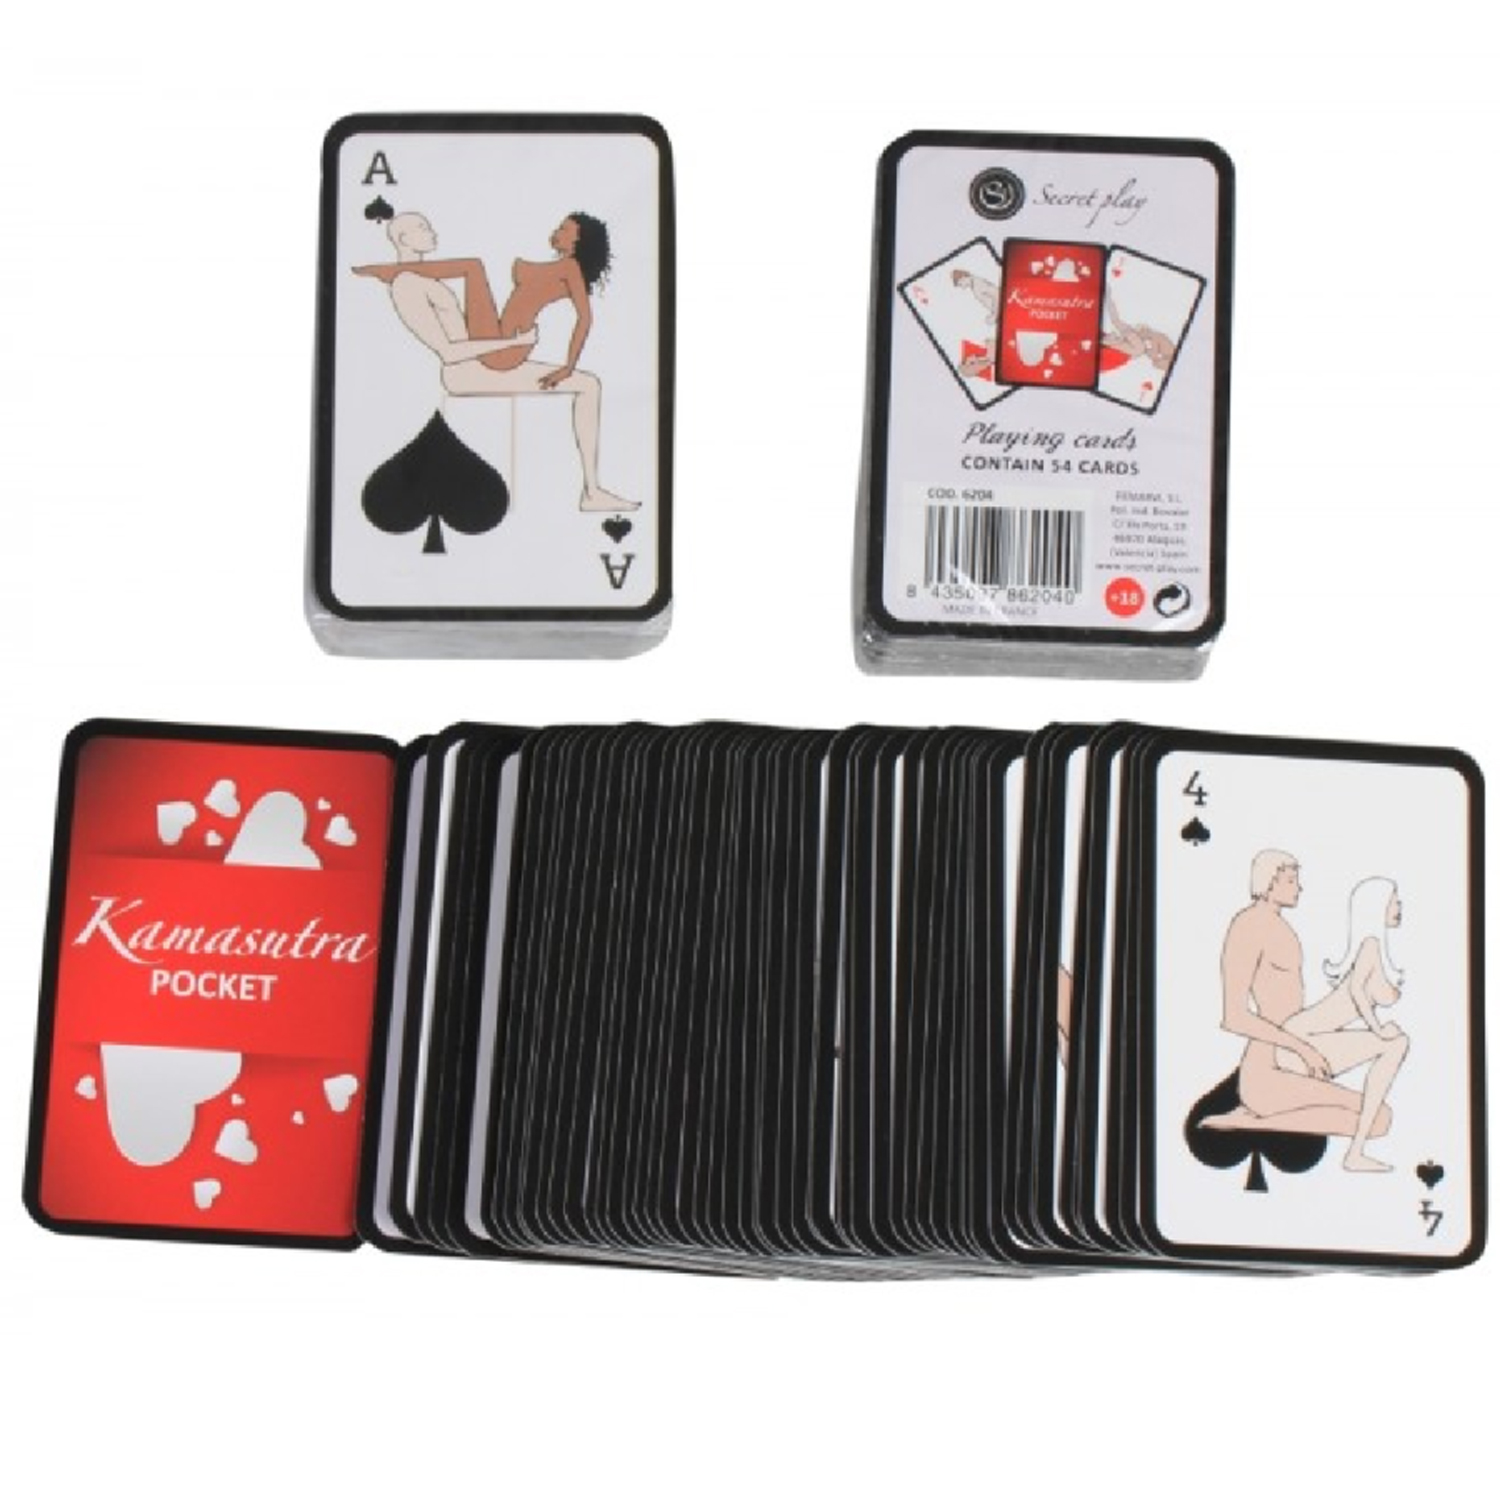 216341-8435097862040-secretplay-pocket-kamasutra-playing-cards-I-1jpg